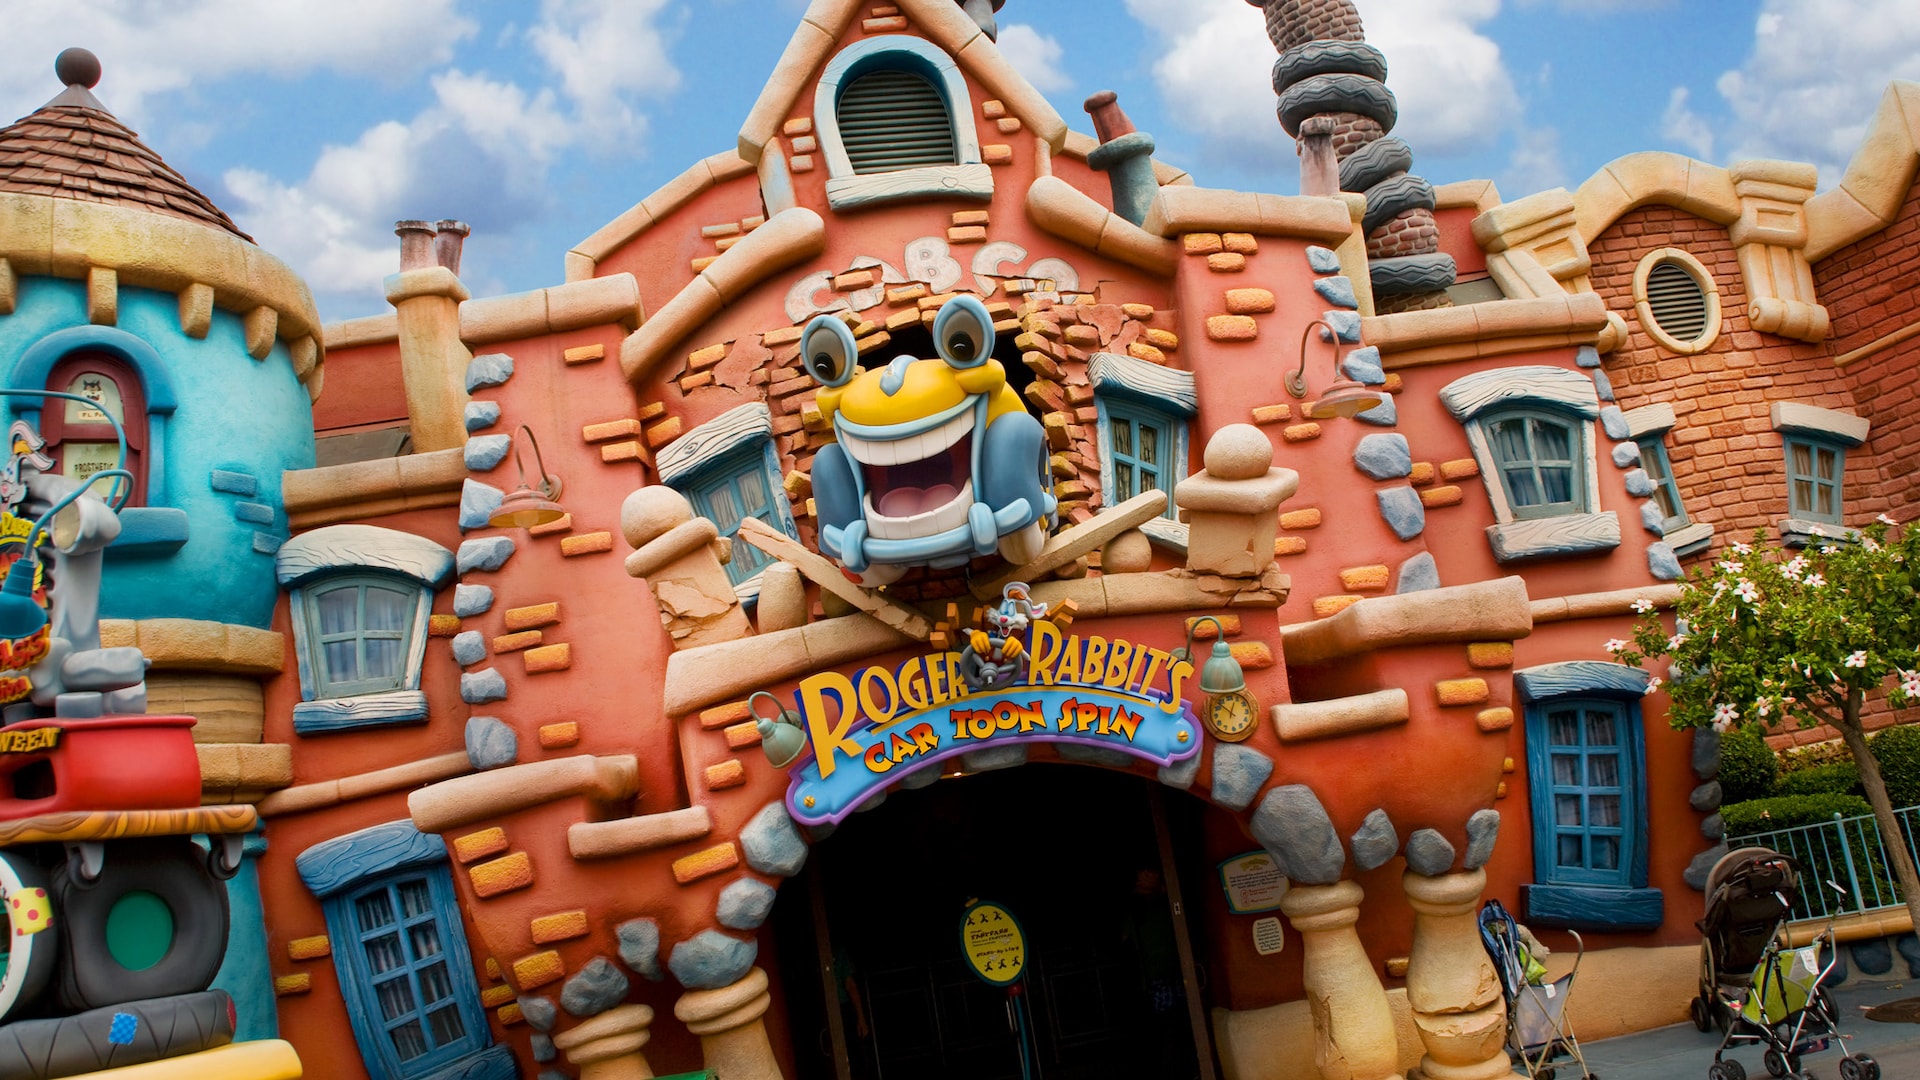 Roger Rabbit S Car Toon Spin Rides Attractions Disneyland Park Disneyland Resort - walt disney world resort roblox